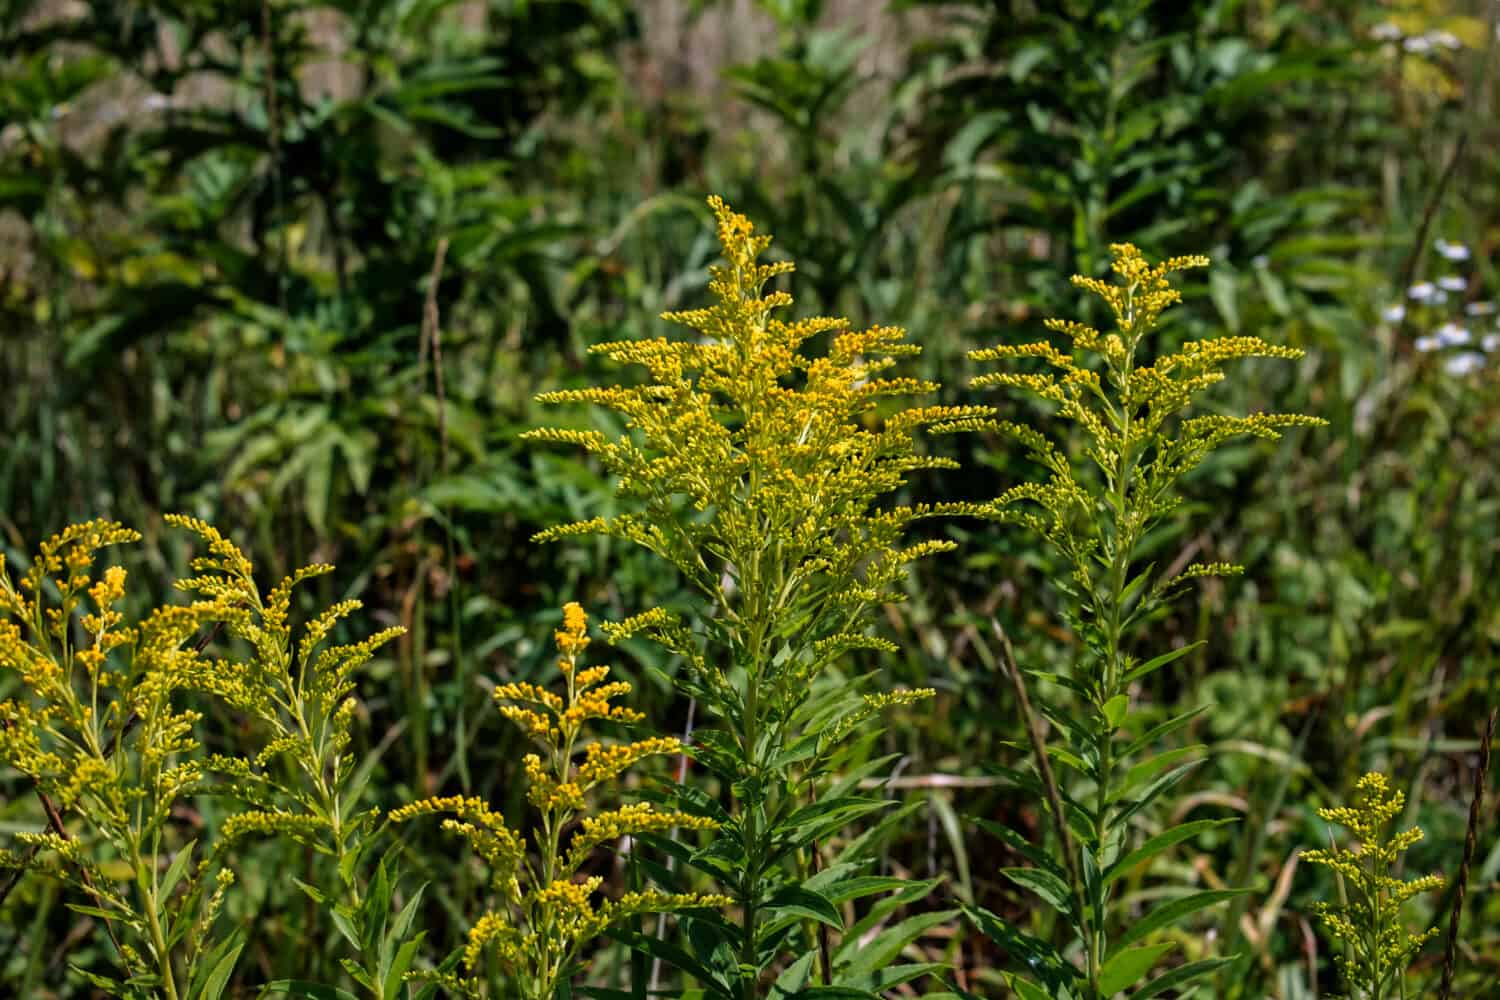 Herb of Canada goldenrod (Solidago altissima)